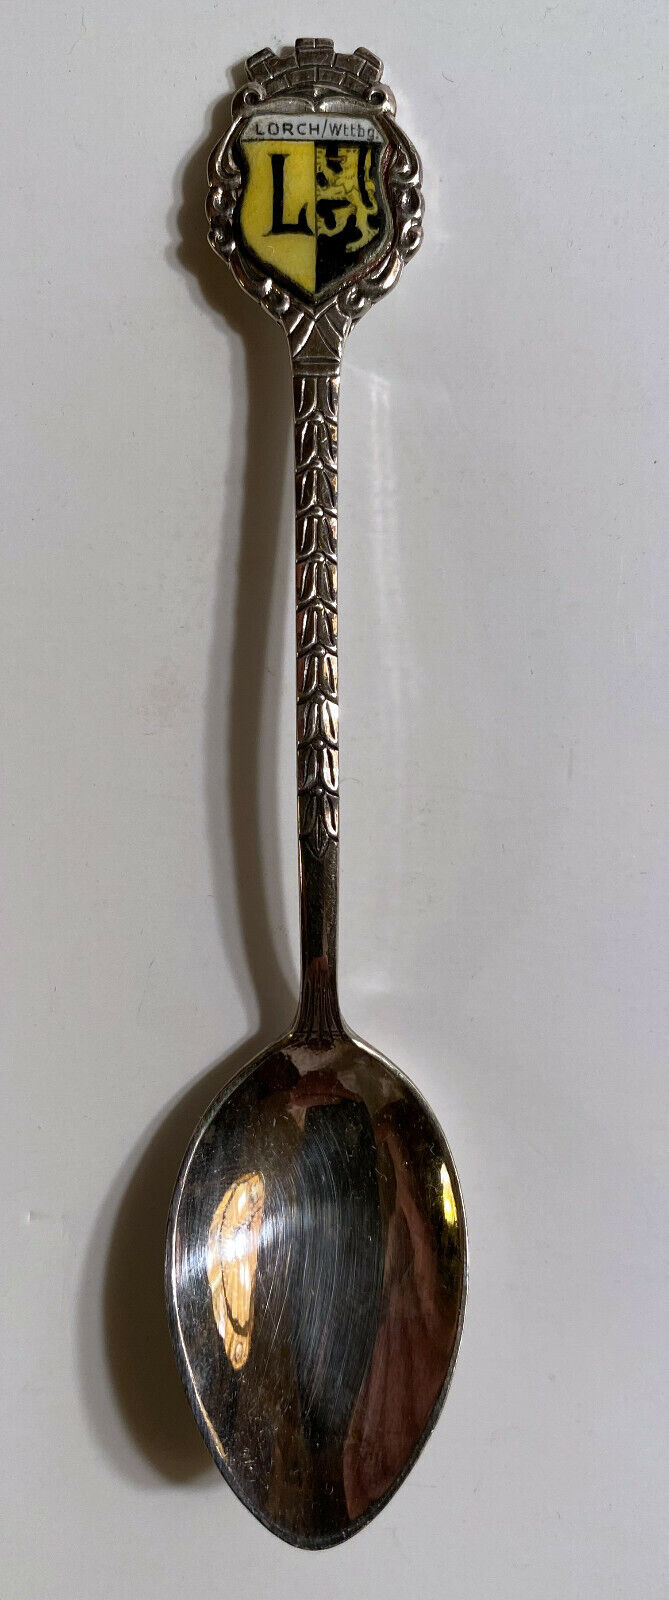 2 Vintage souvenir spoons, Bremen, Lorch Germany Без бренда - фотография #2